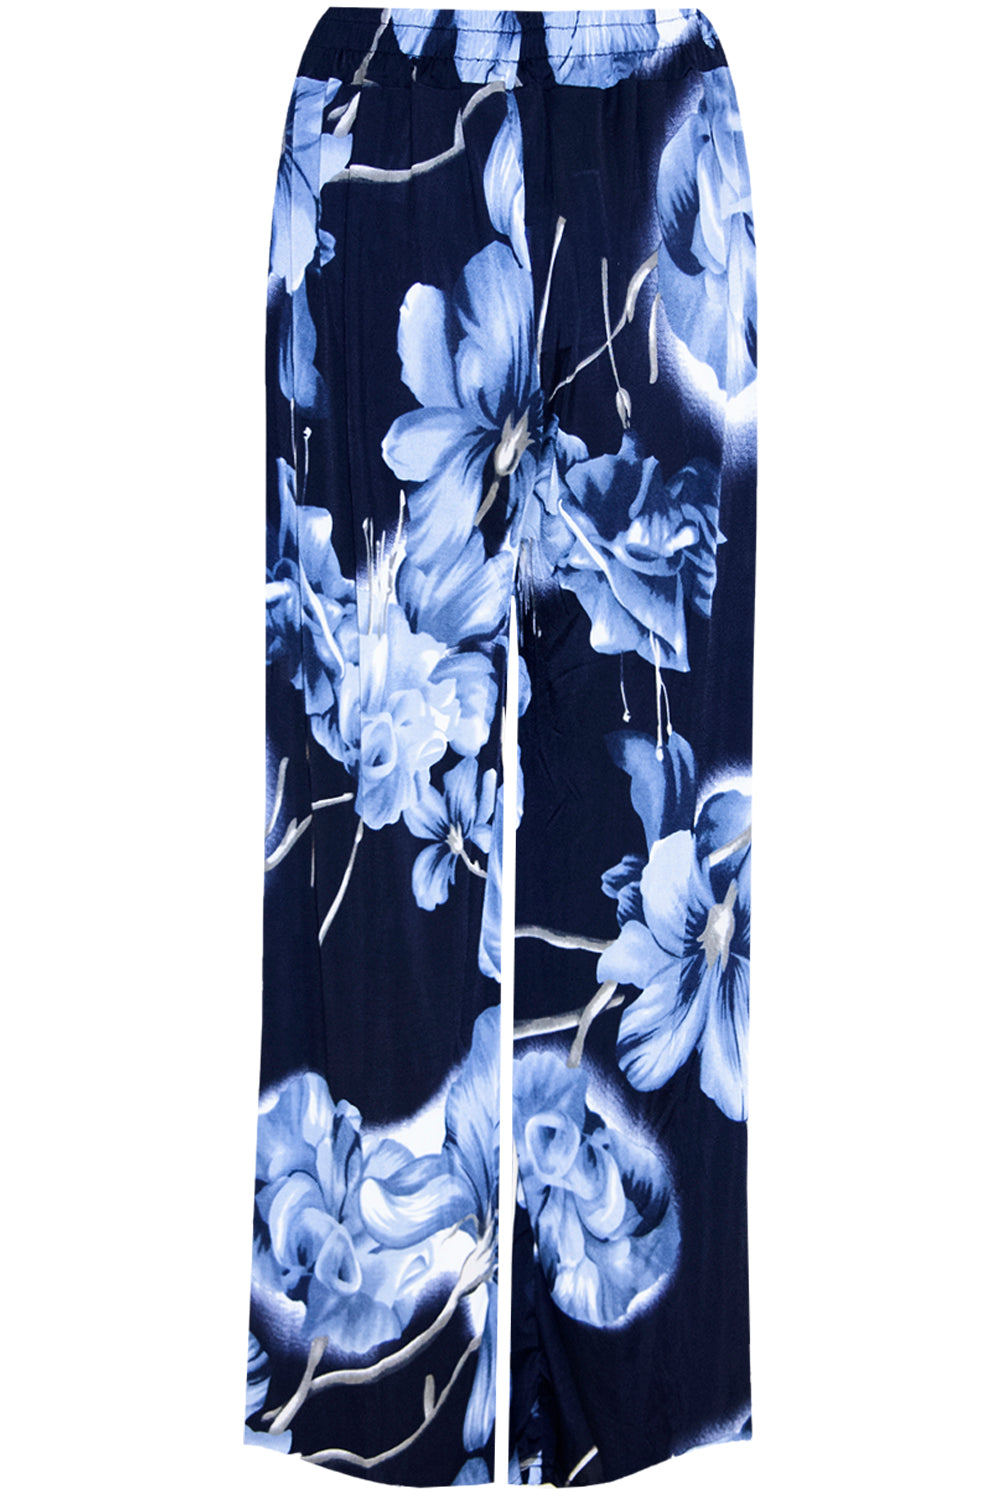 Lily Floral Print Wide Leg 3/4 Palazzo Pants